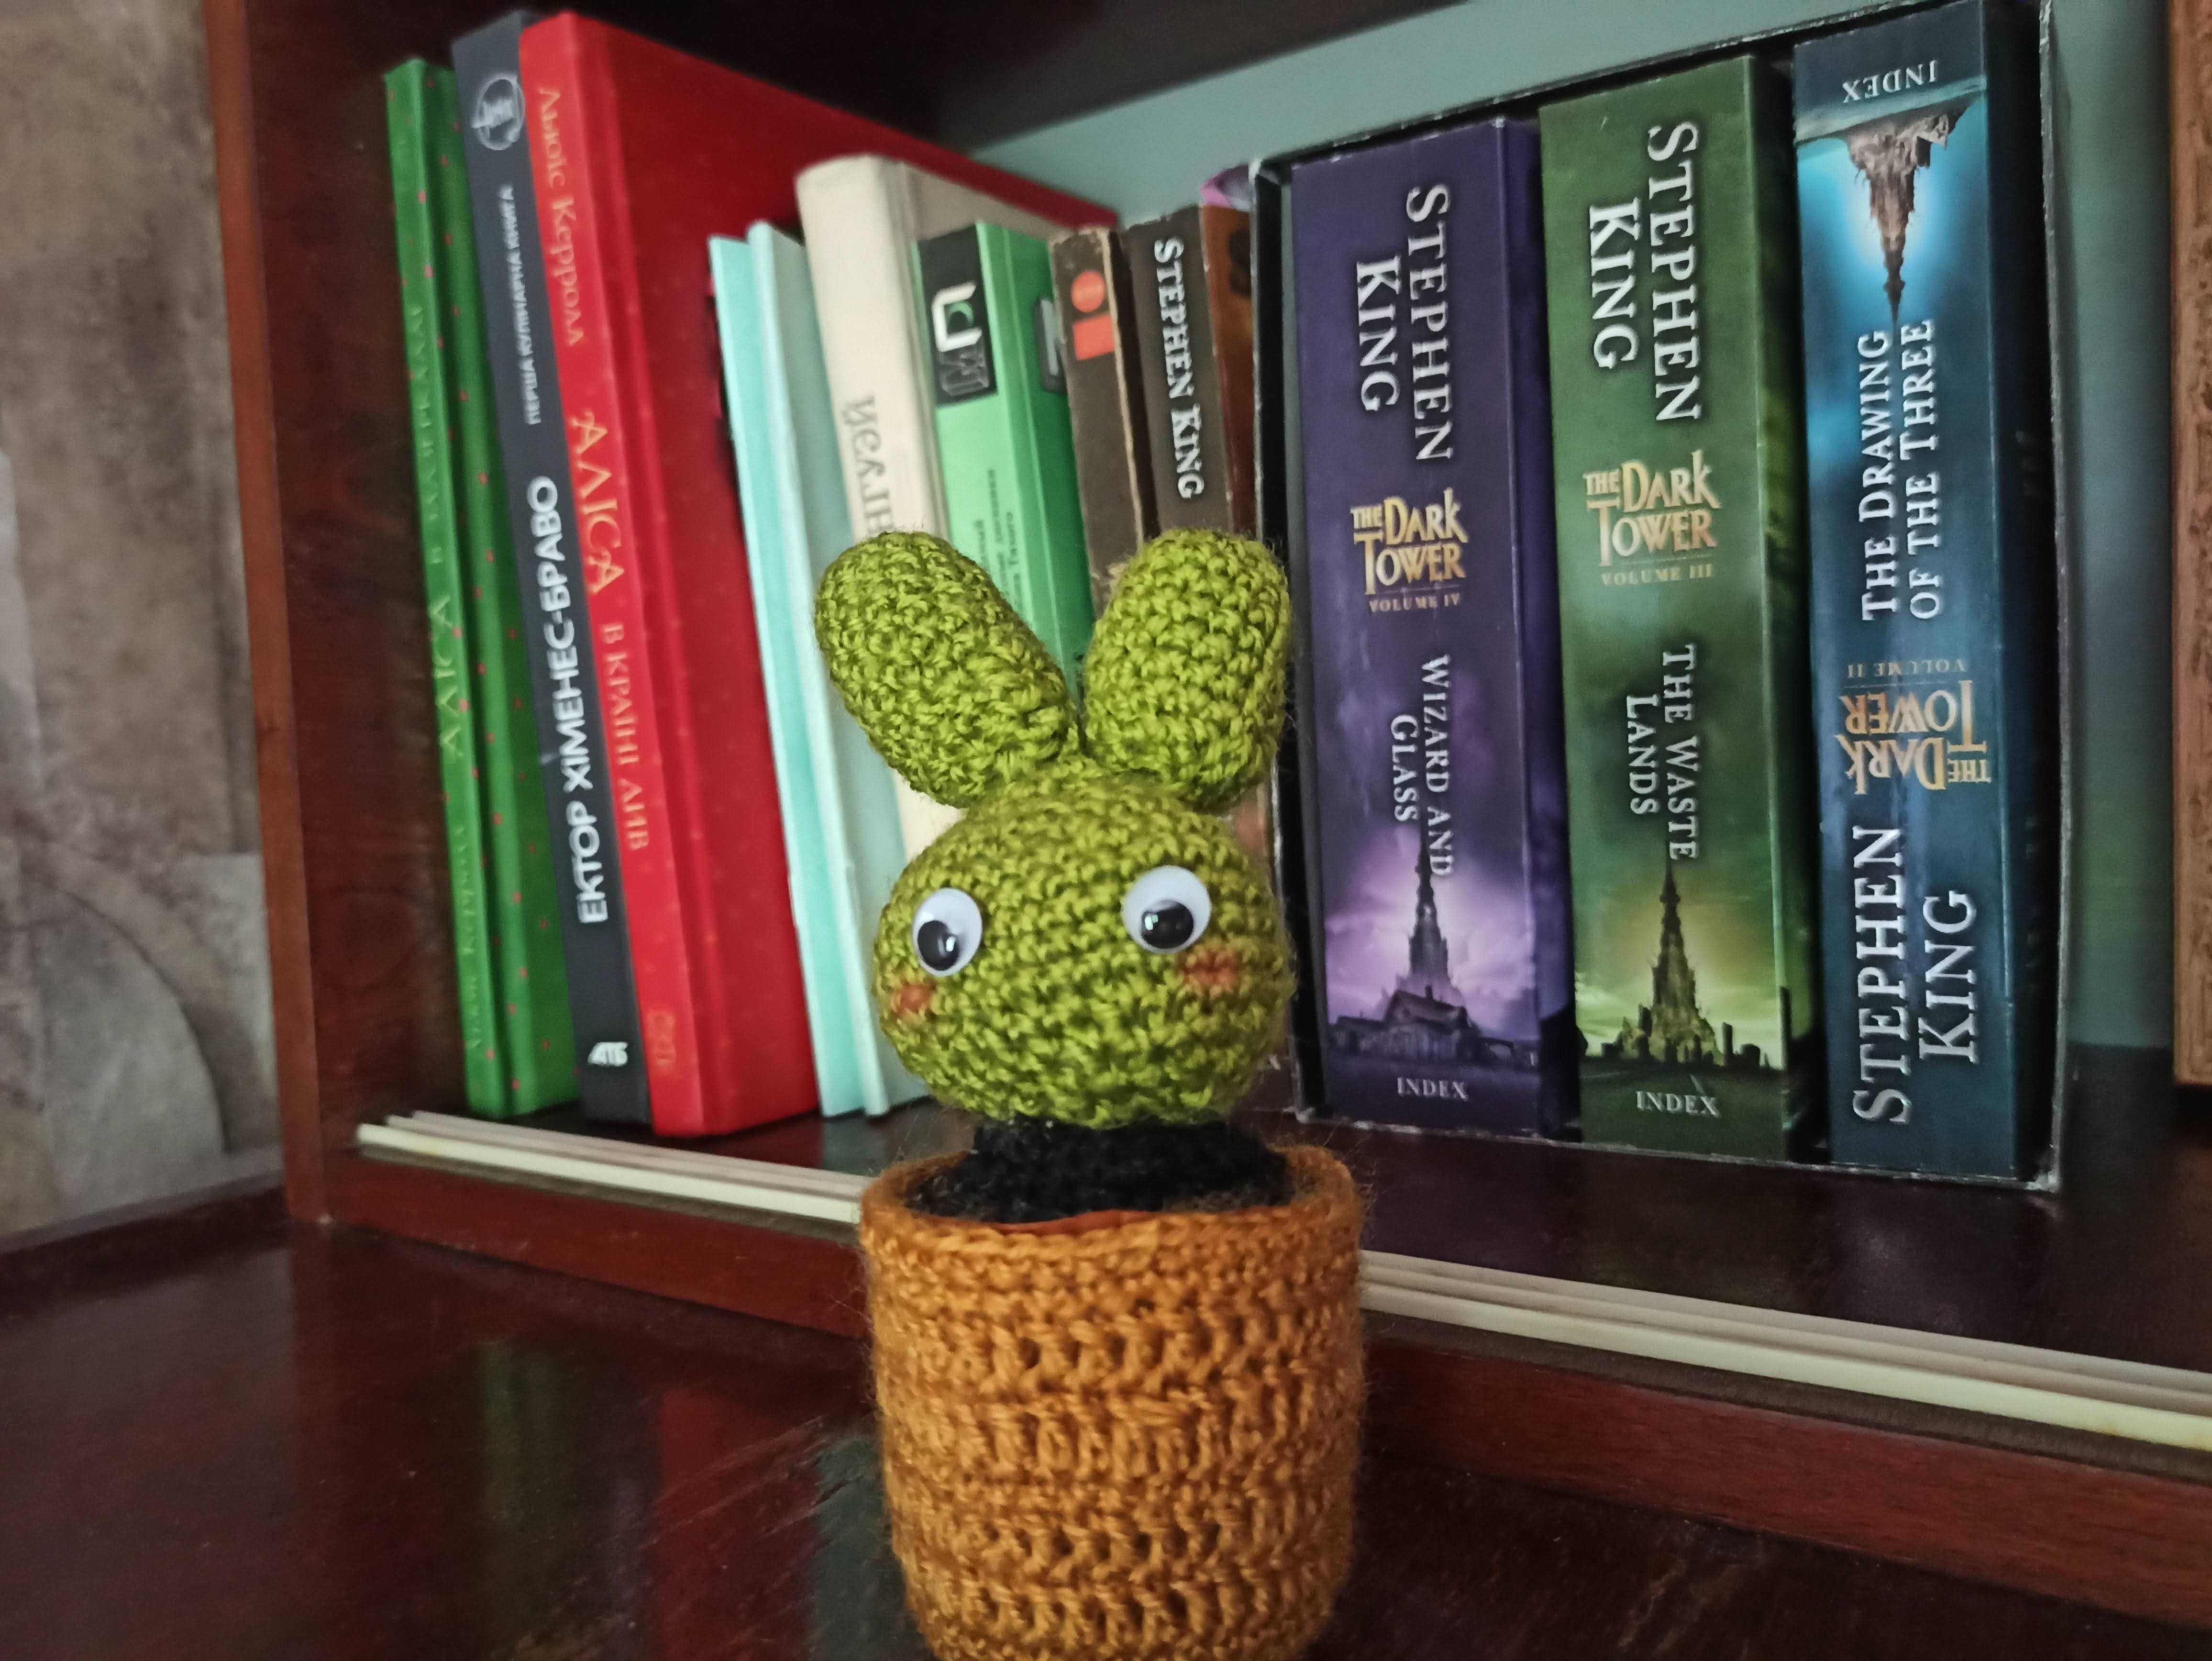 вязанная игрушка амигуруми кактус-заяц